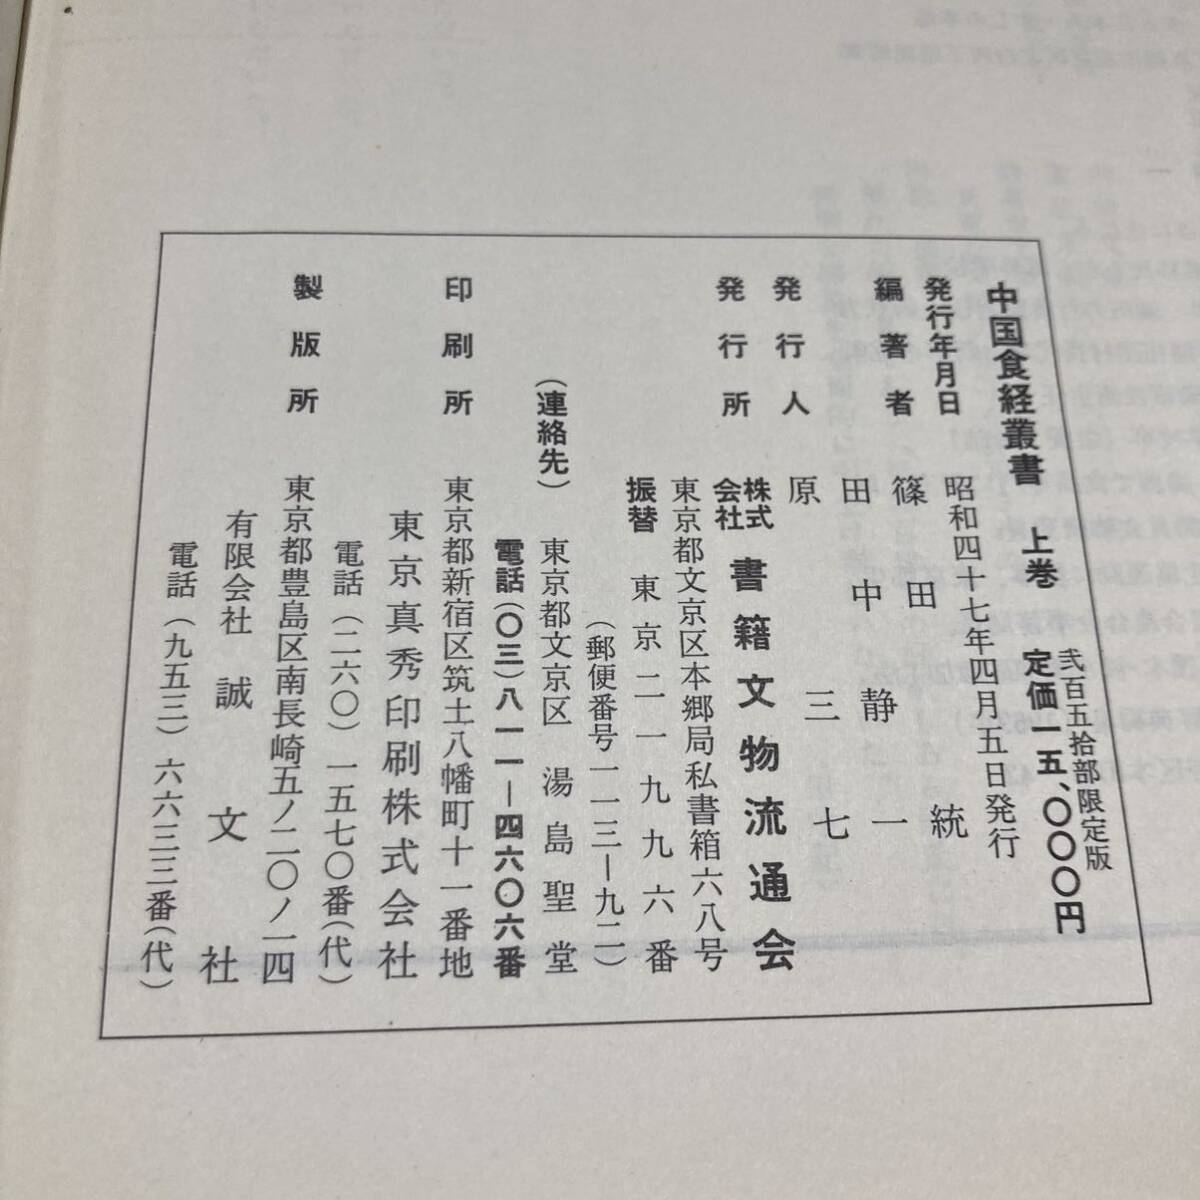 J 昭和47年発行 影印版 精装本「中国食経叢書」 全2冊揃 250部限定版の画像6